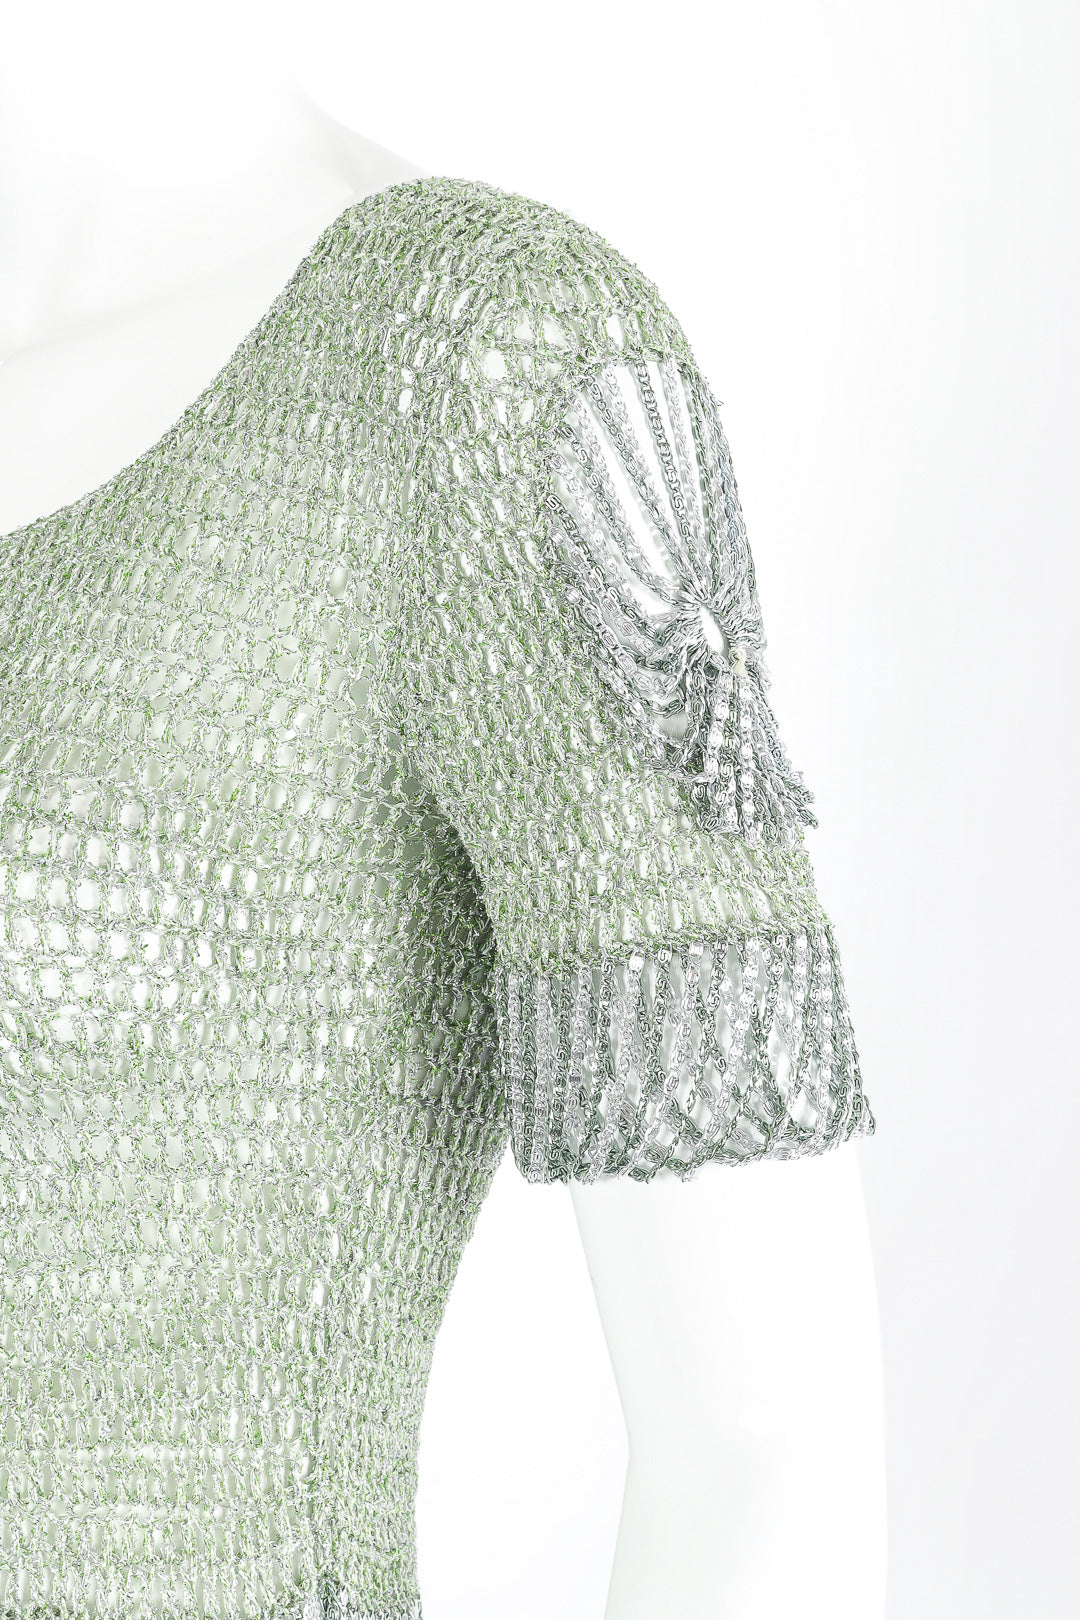 Knit top with chain details by Loris Azzaro mannequin shoulder @recessla